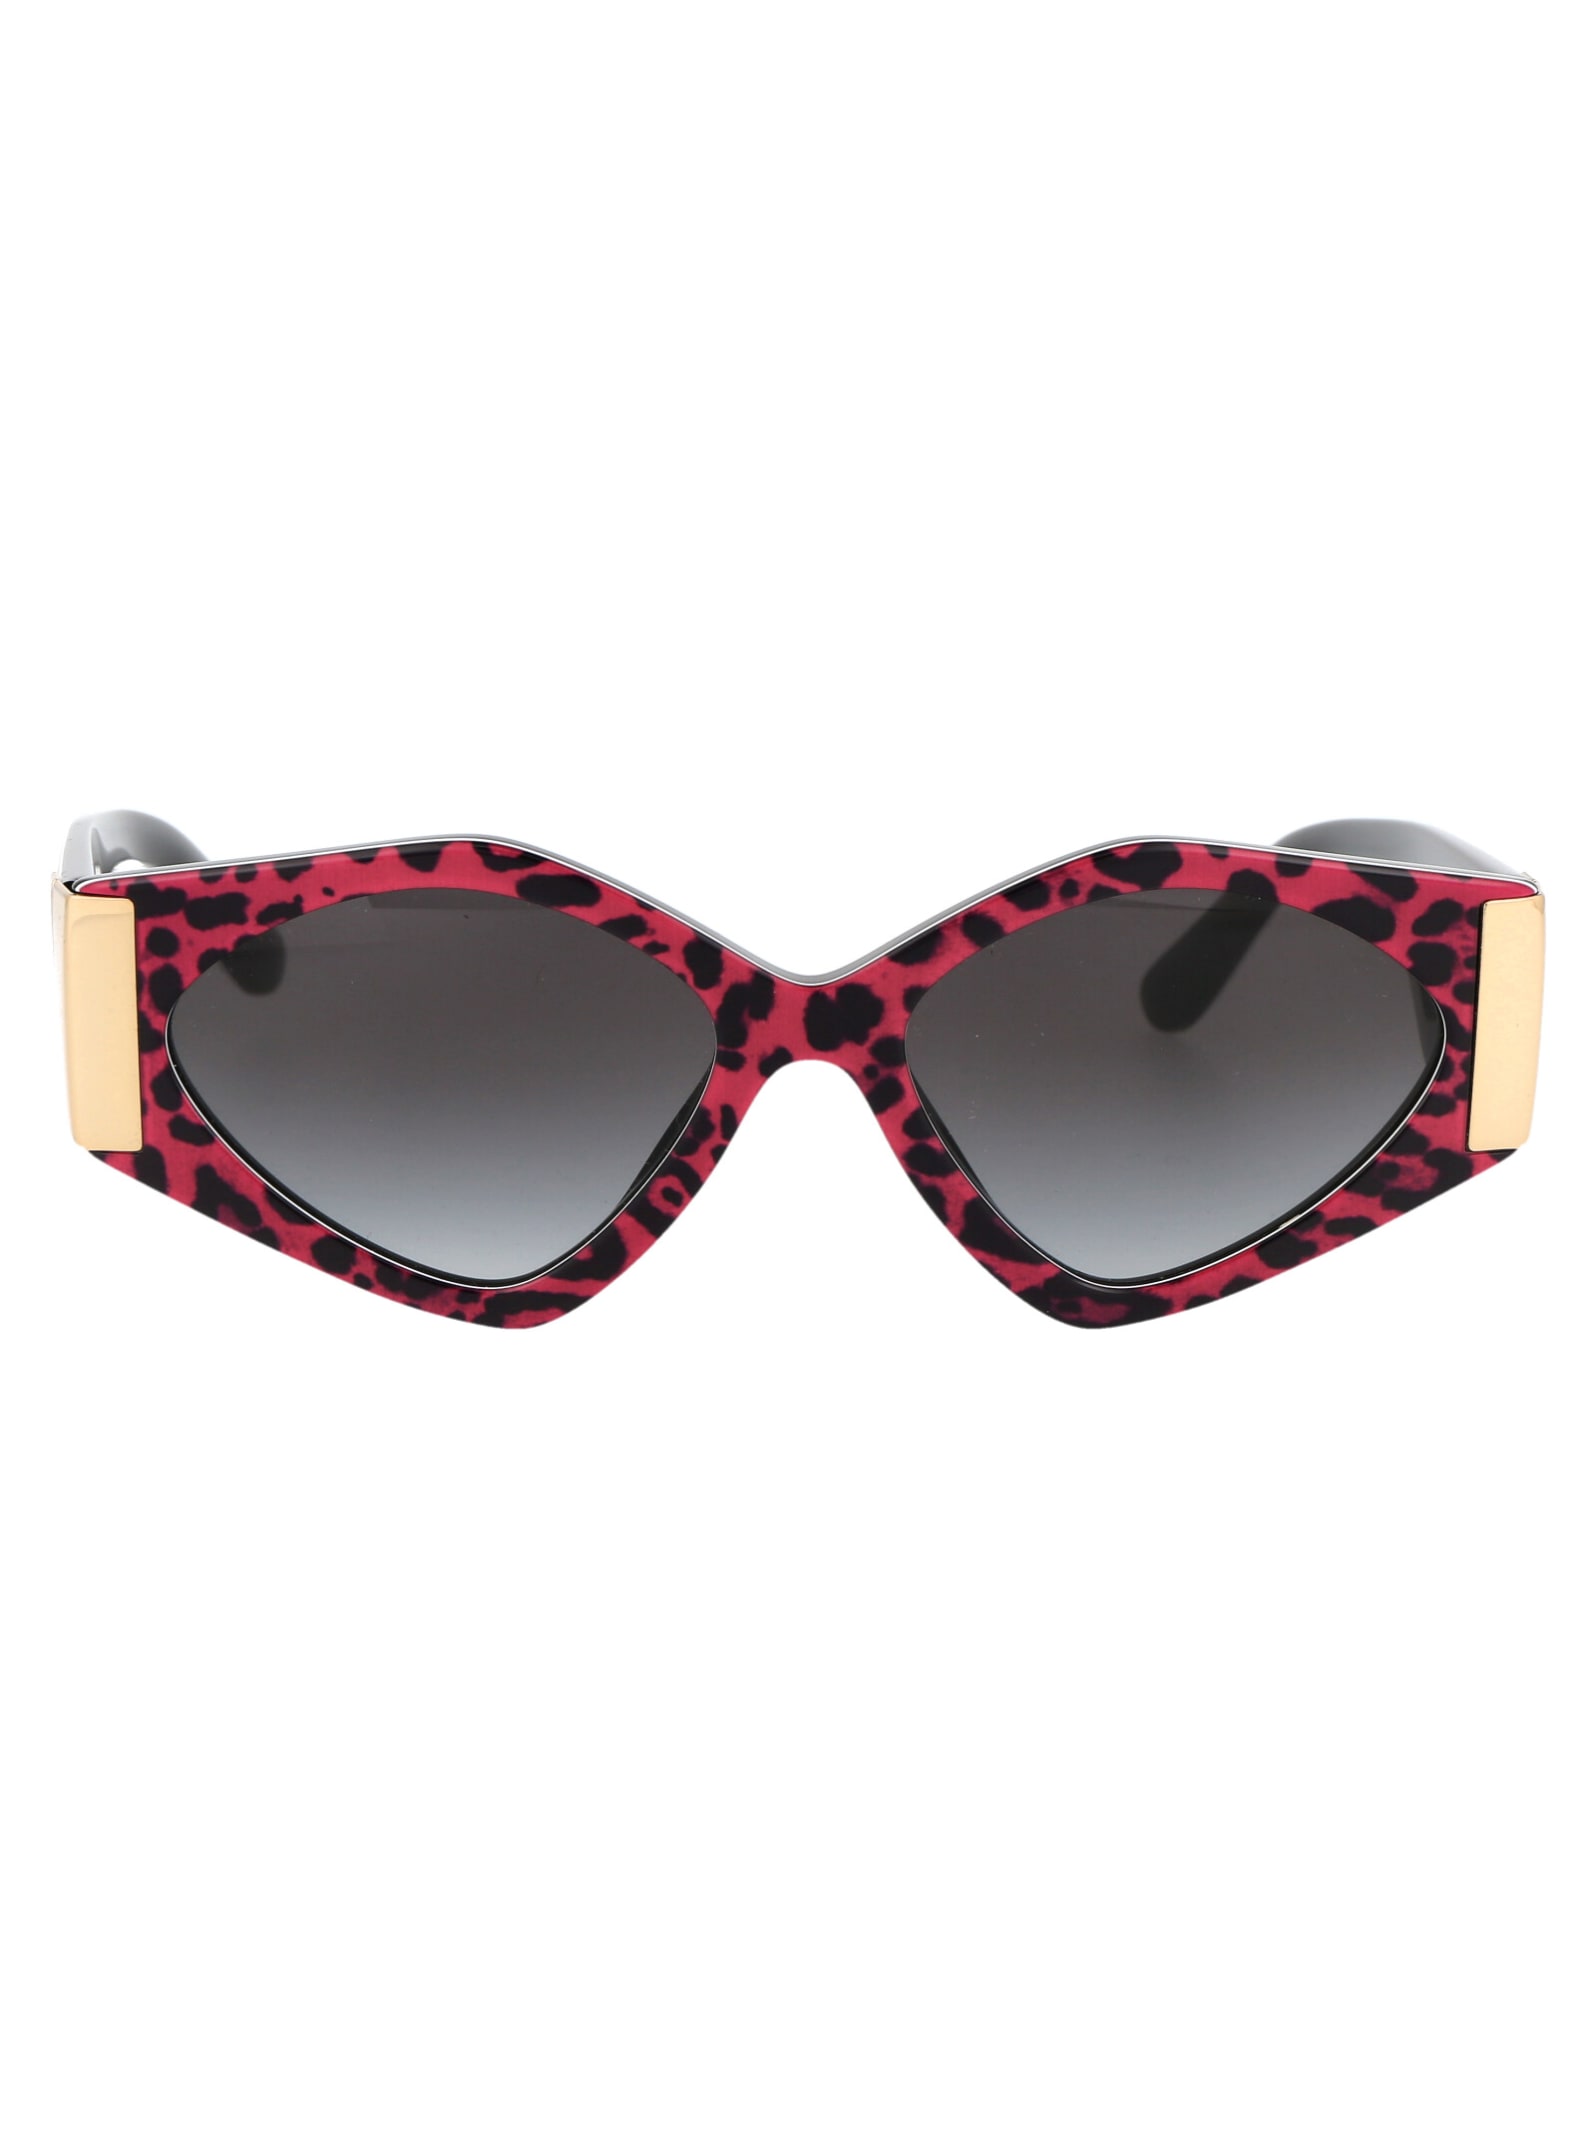 Dolce & Gabbana Eyewear 0dg4396 Sunglasses